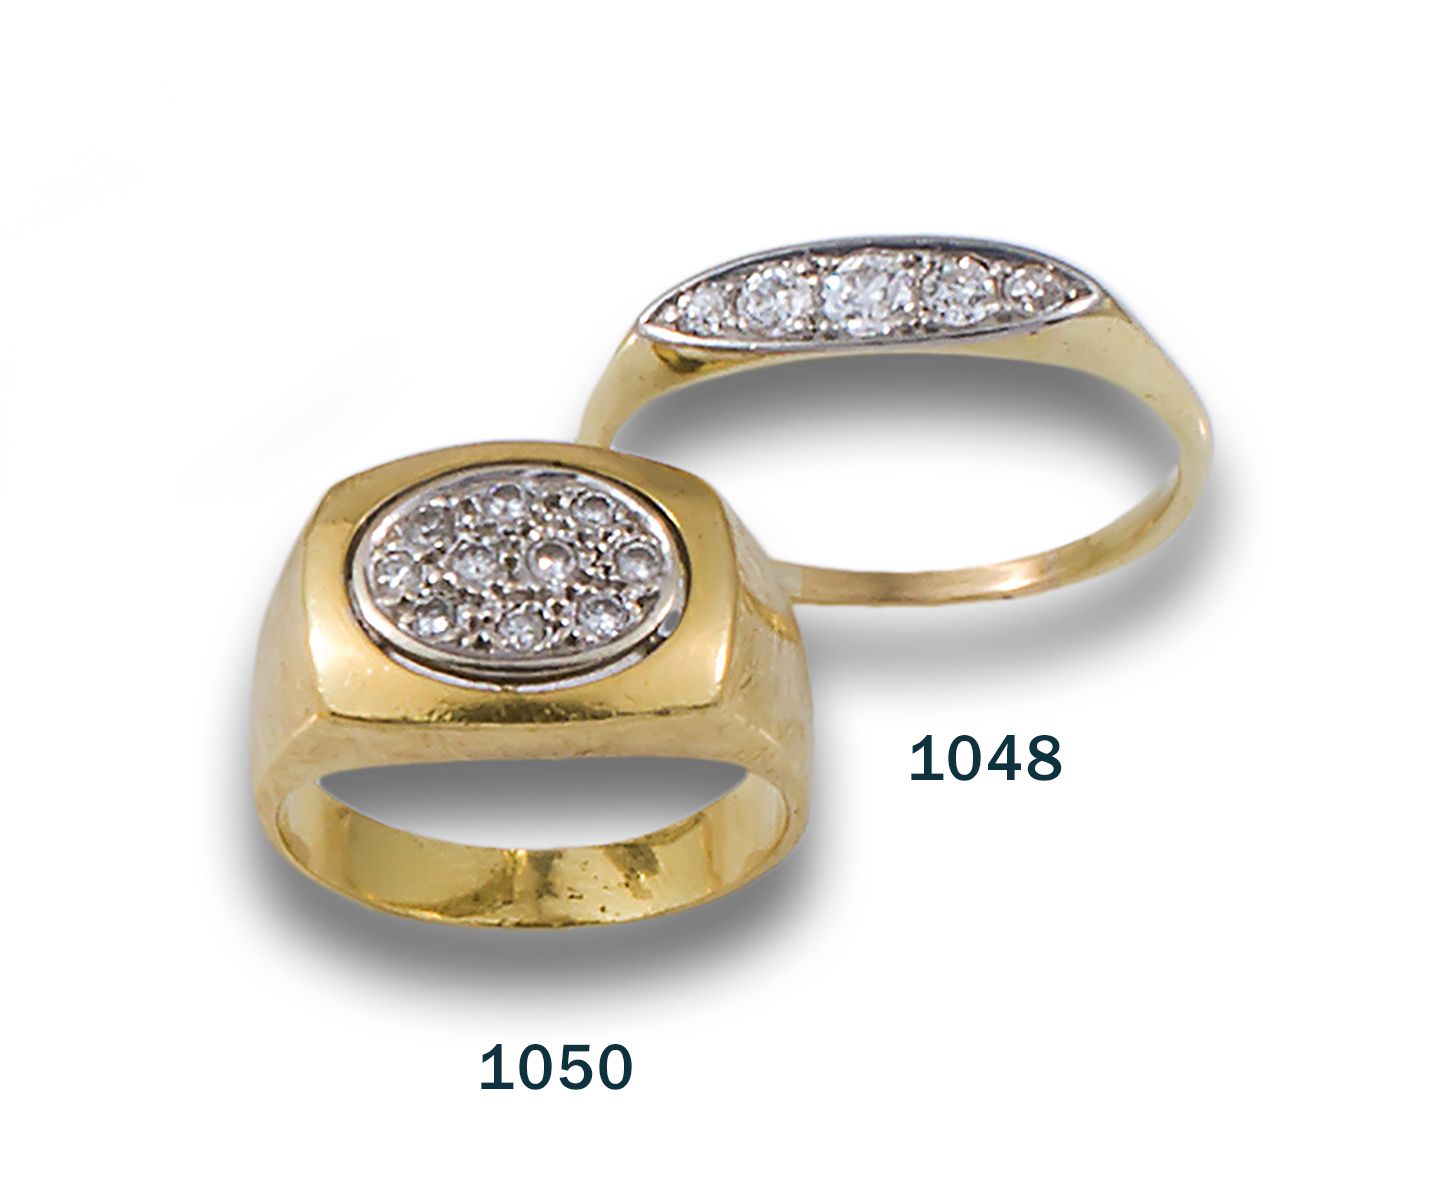 ANTIQUE DIAMOND BAND IN YELLOW GOLD 古董18K黄金戒指，铂金镶嵌，钻石，旧式切割，渐变排列，估计重量0.35克拉。